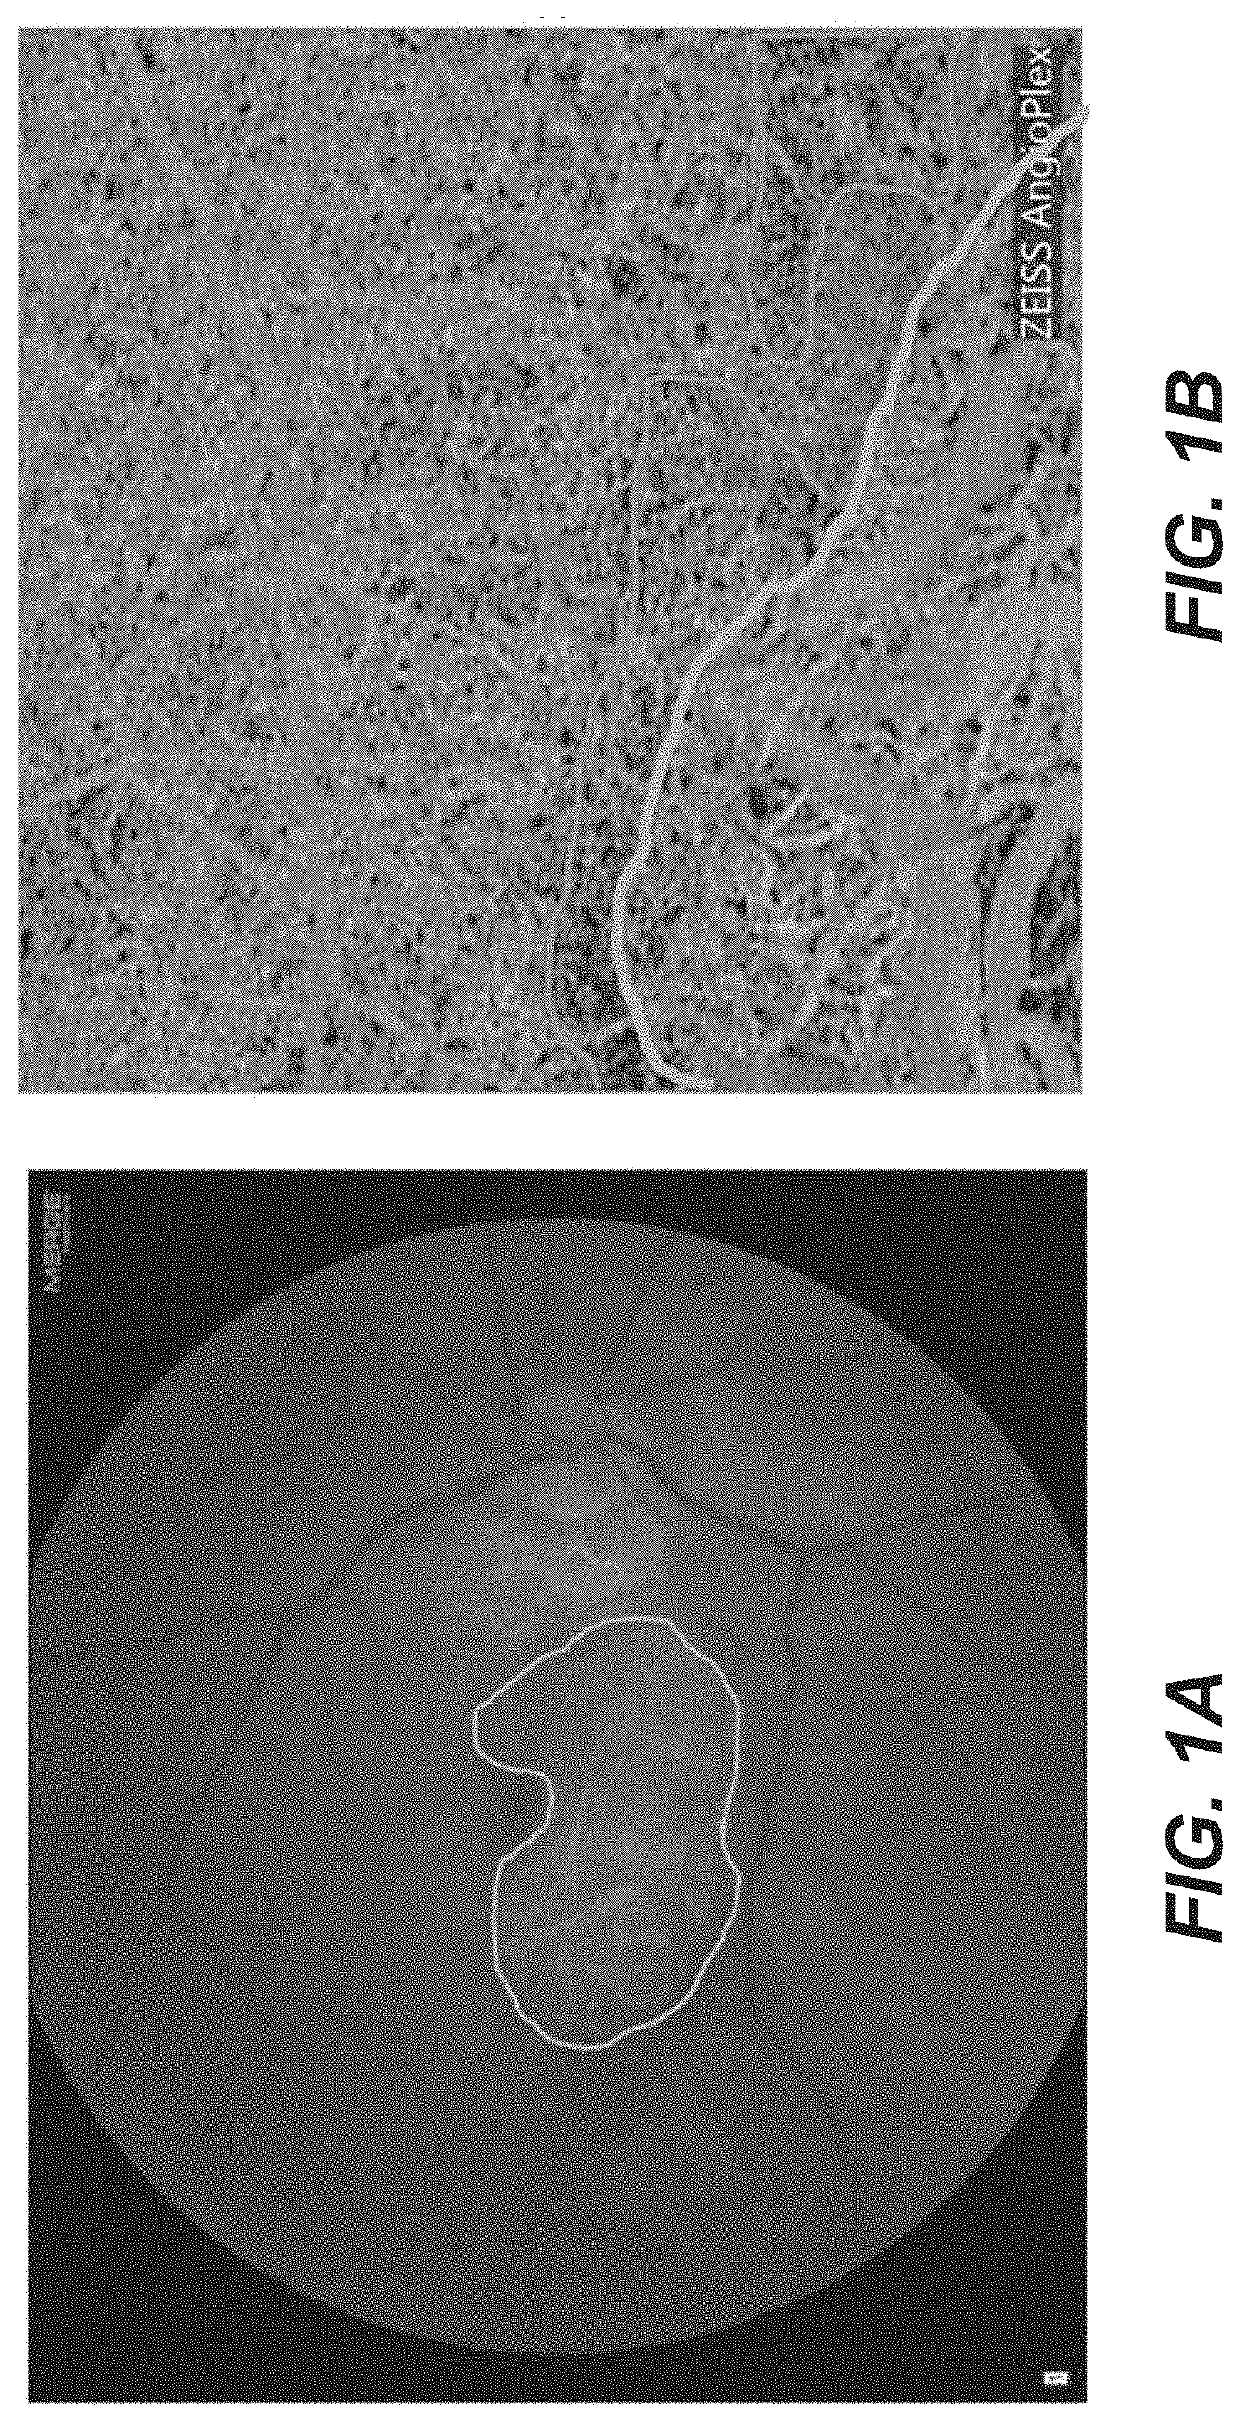 Non-leaking or minimally-leaking choroidal or retinal revascularization